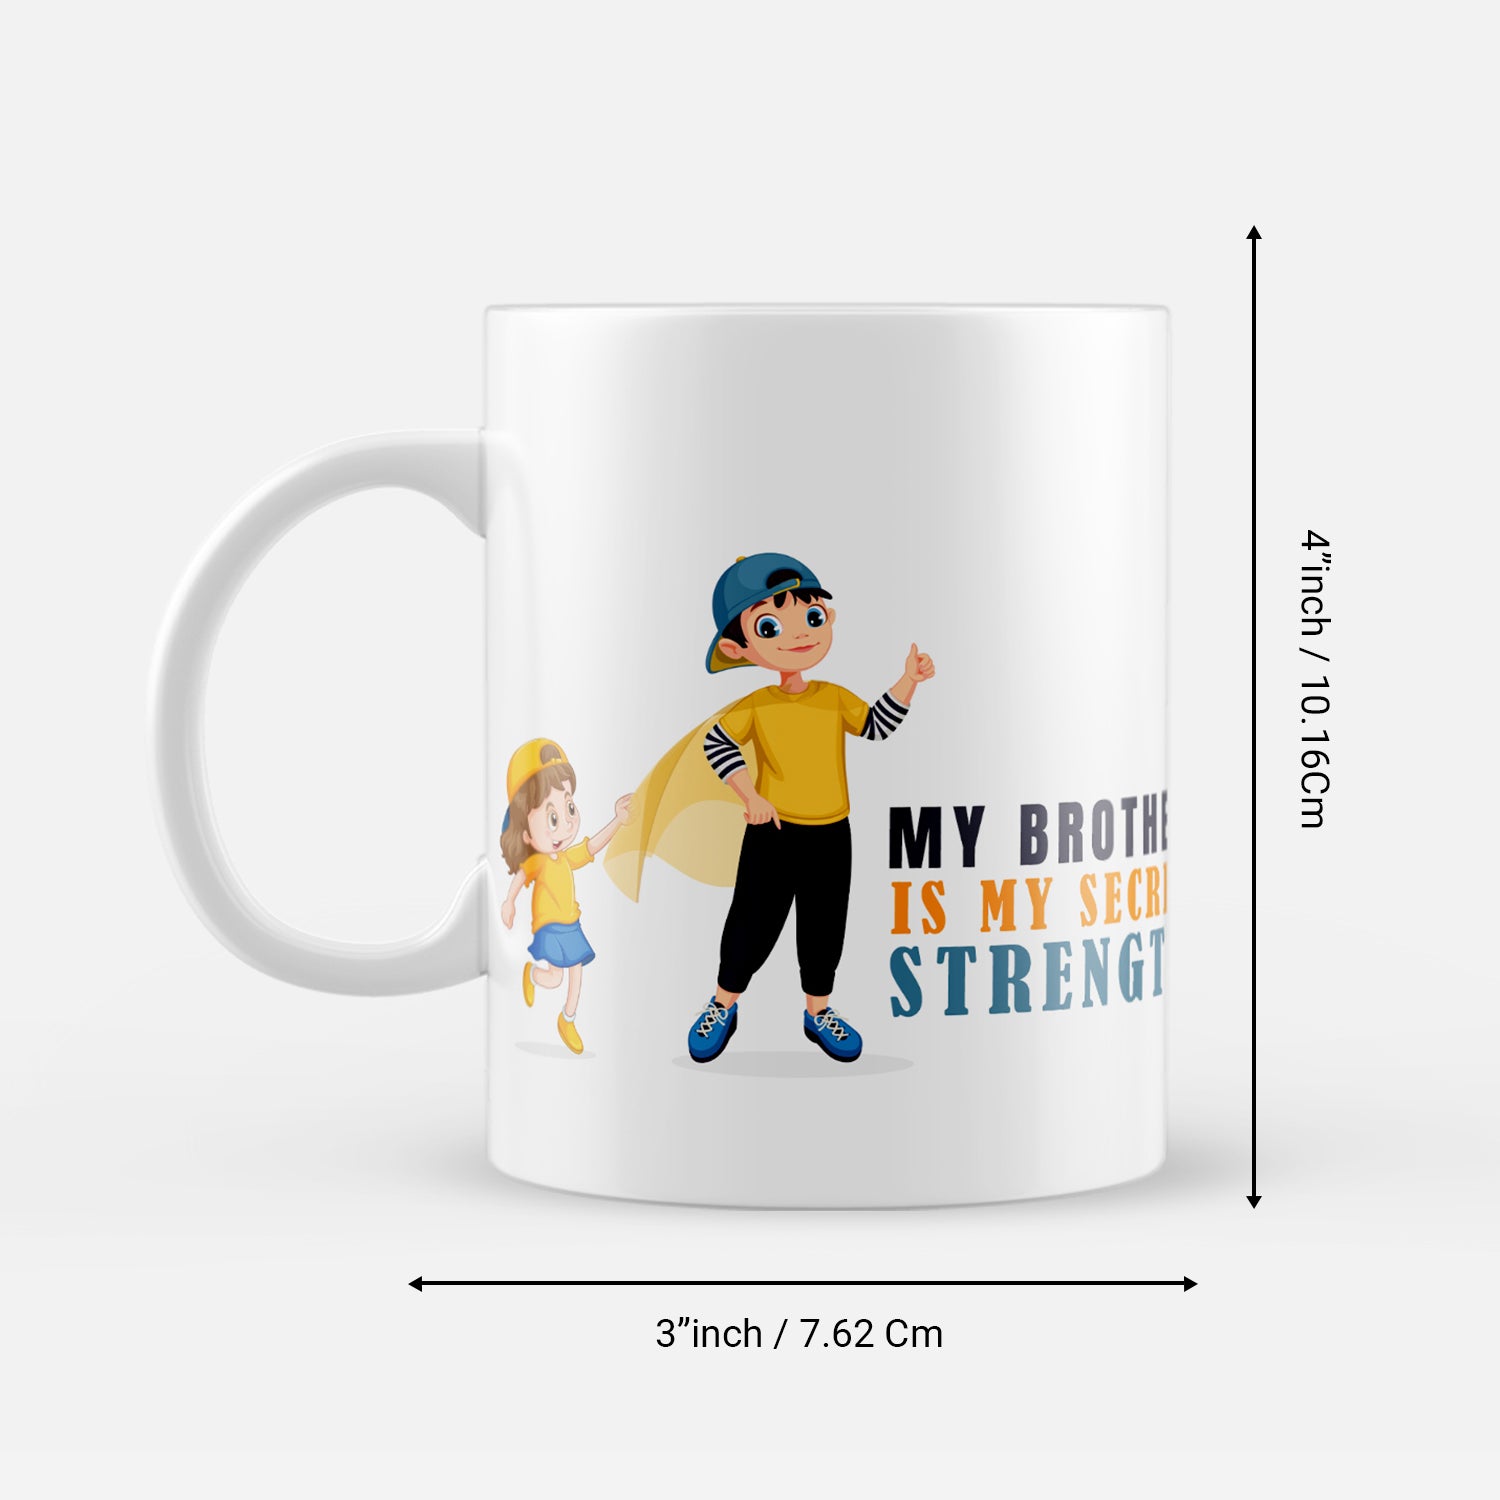 "My Brother is My Secret Strength" Brother Ceramic Coffee/Tea Mug 3